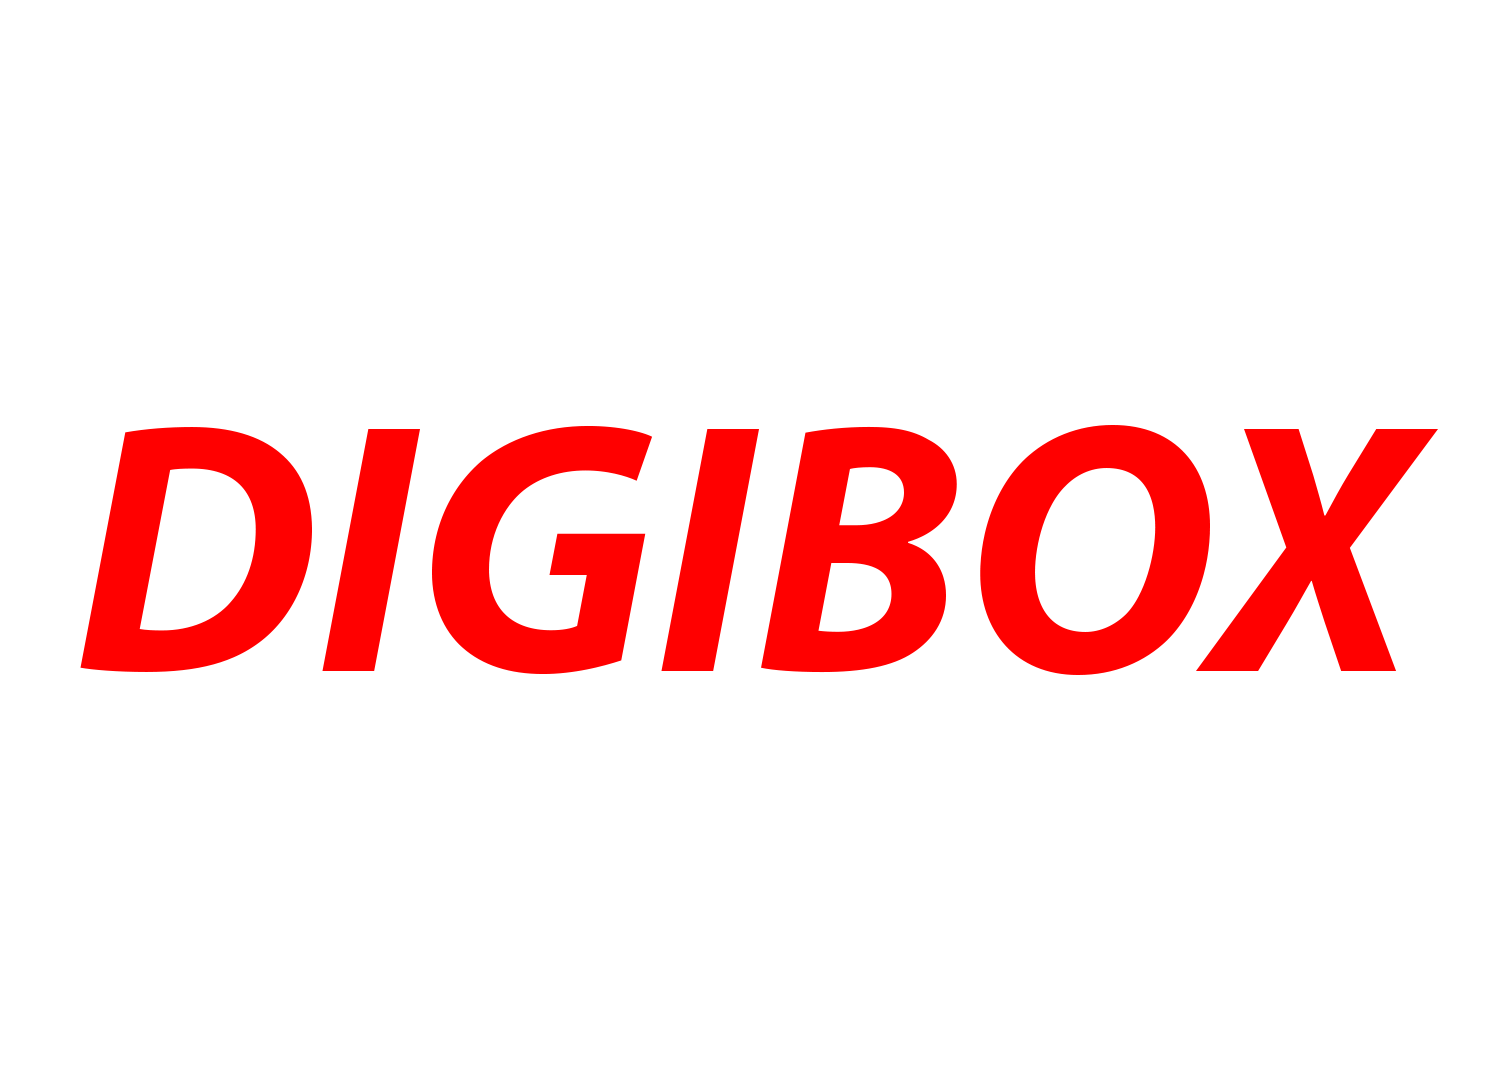 DIGIBOX TECHNOLOGIES